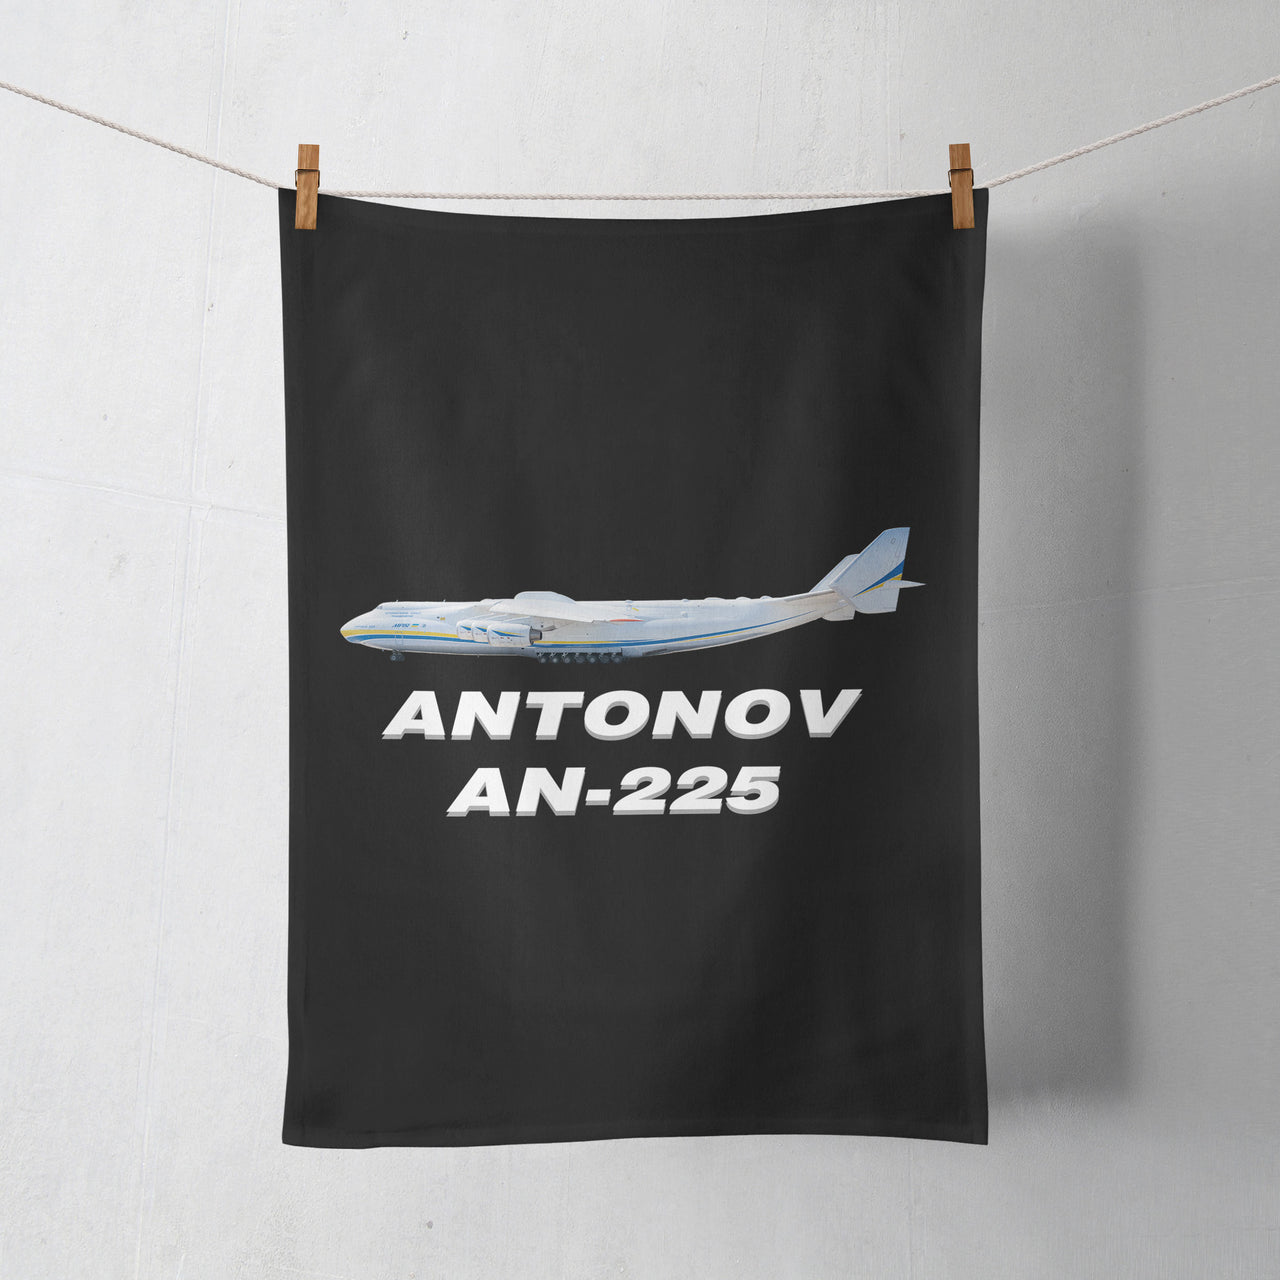 The Antonov AN-225 Designed Towels